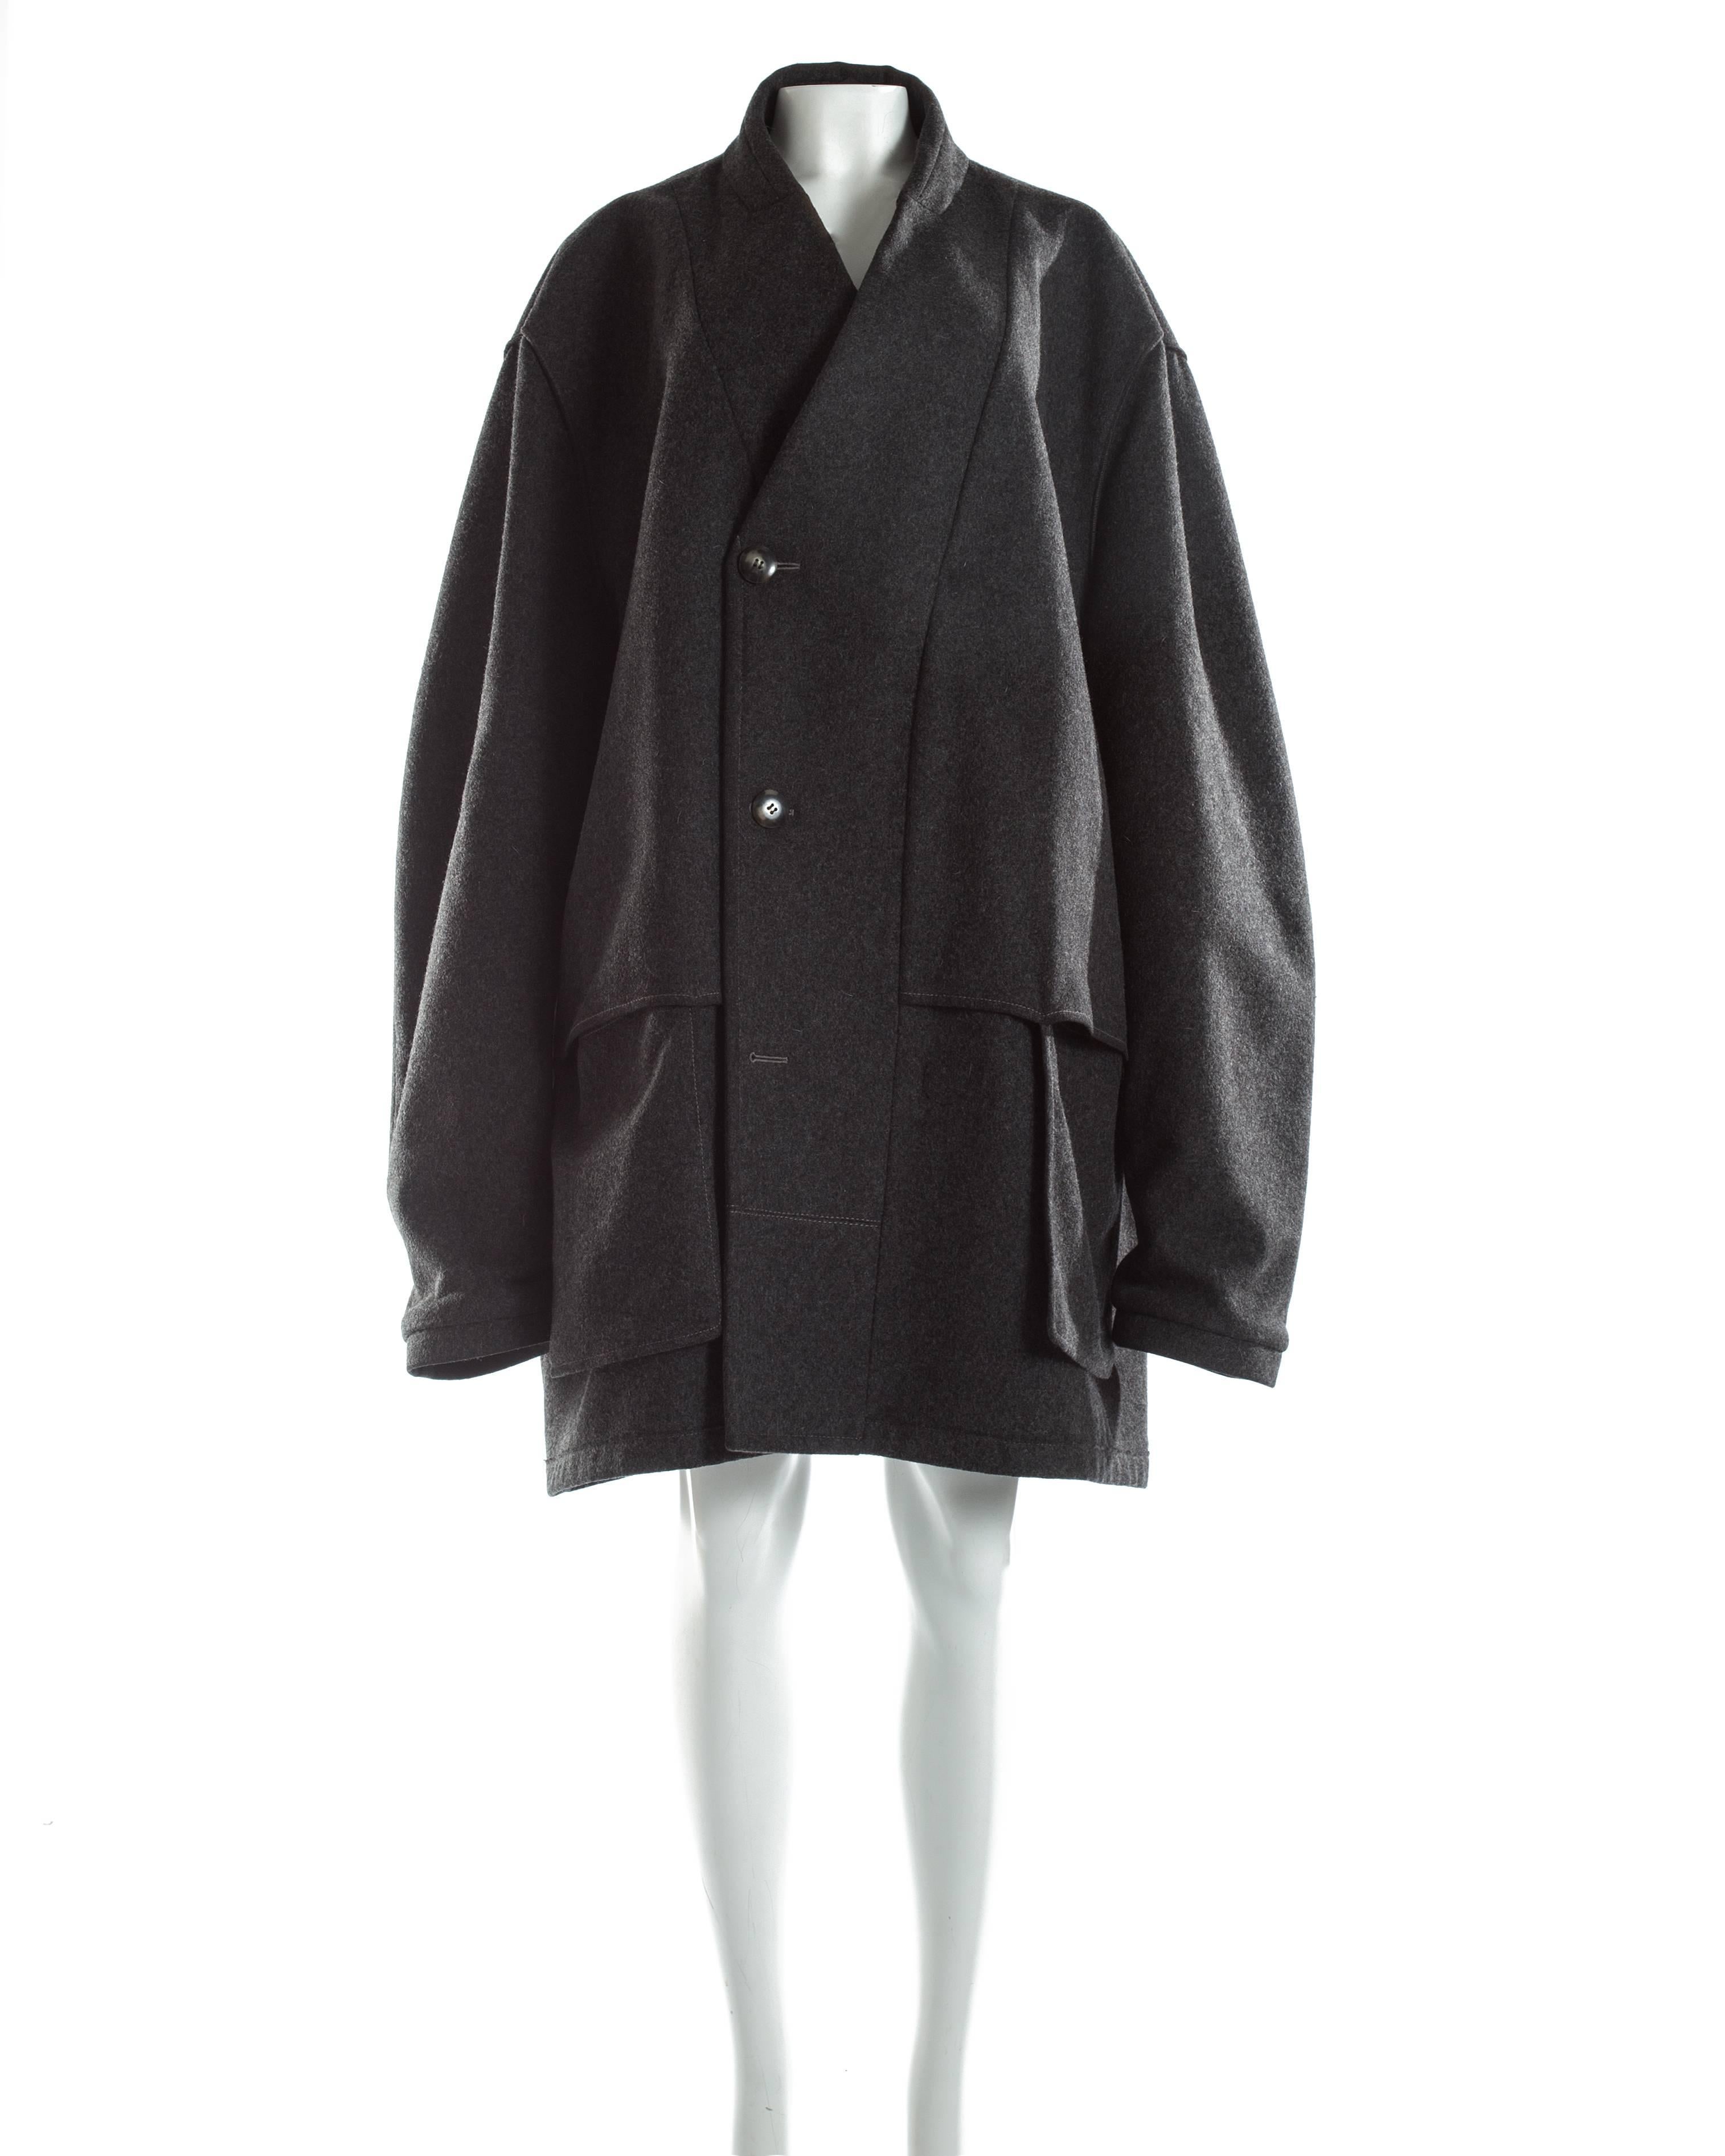 Margiela charcoal melton wool overcoat, A / W 2000 4